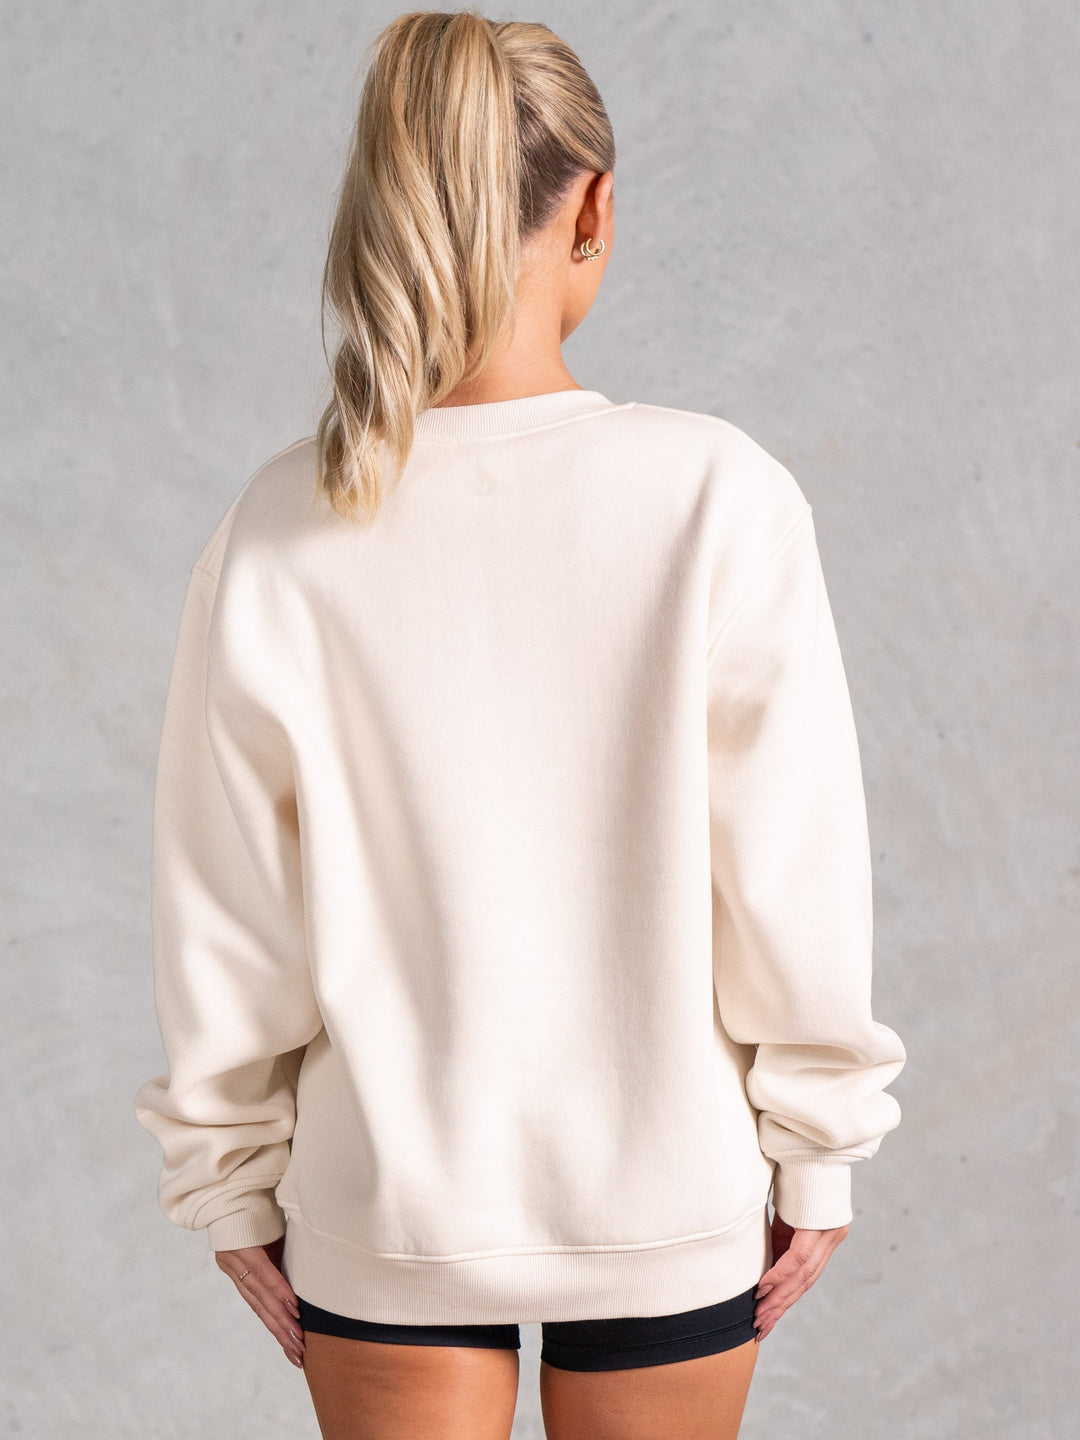 Athletica Sweater - Vanilla Clothing Ryderwear 